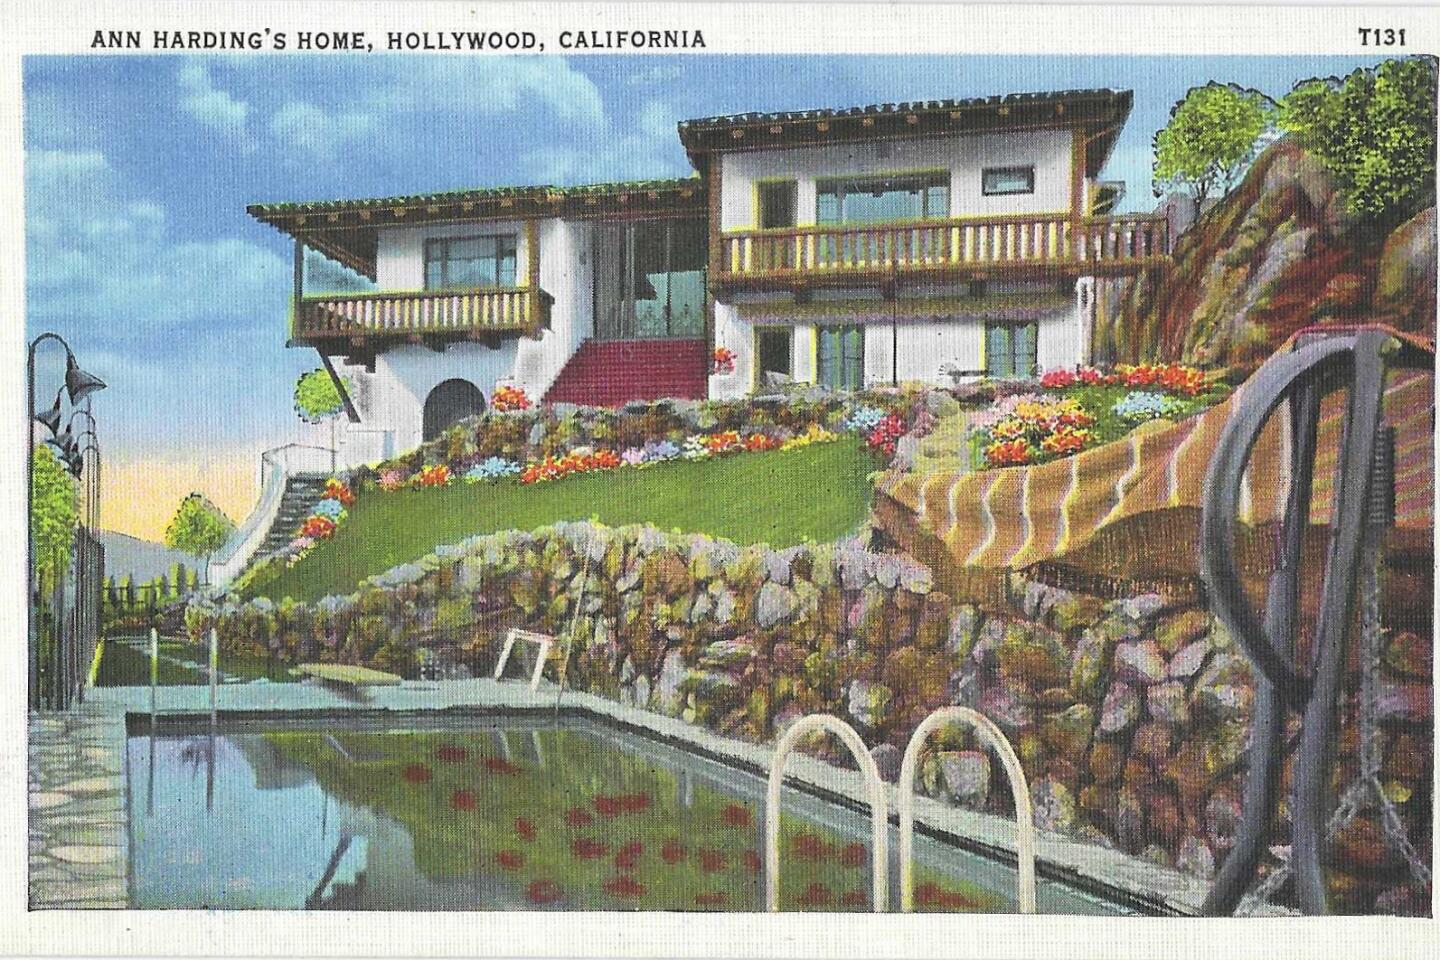 Ann Harding's home on a vintage postcard